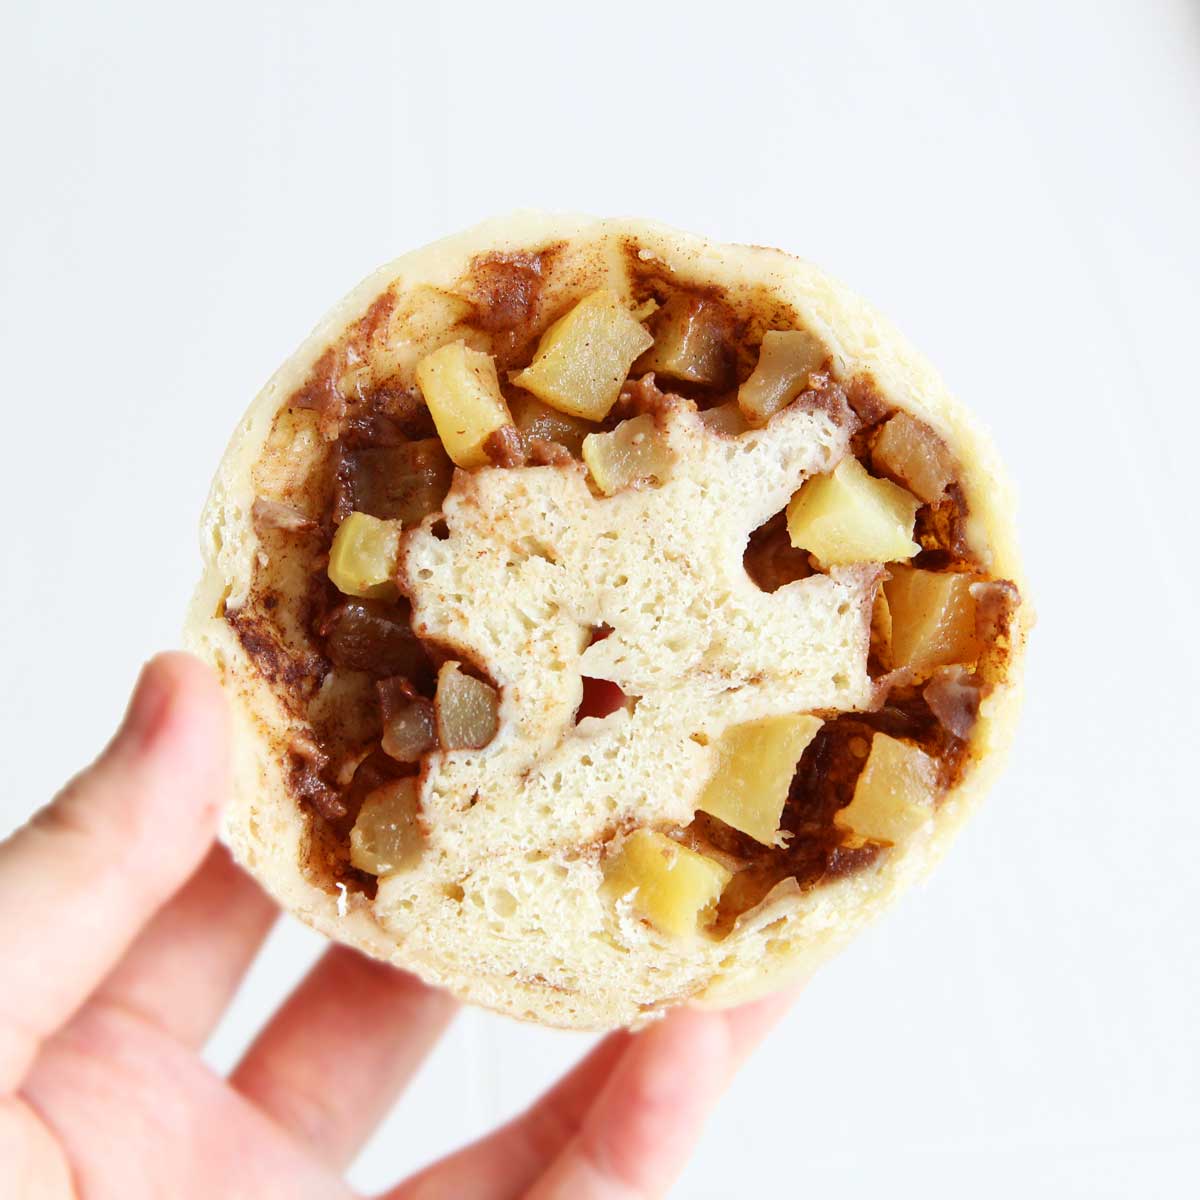 Vegan Apple Pie Stuffed Bagels (A Healthier, Fat-Free Recipe) - Flourless Vanilla Swiss Roll Cake